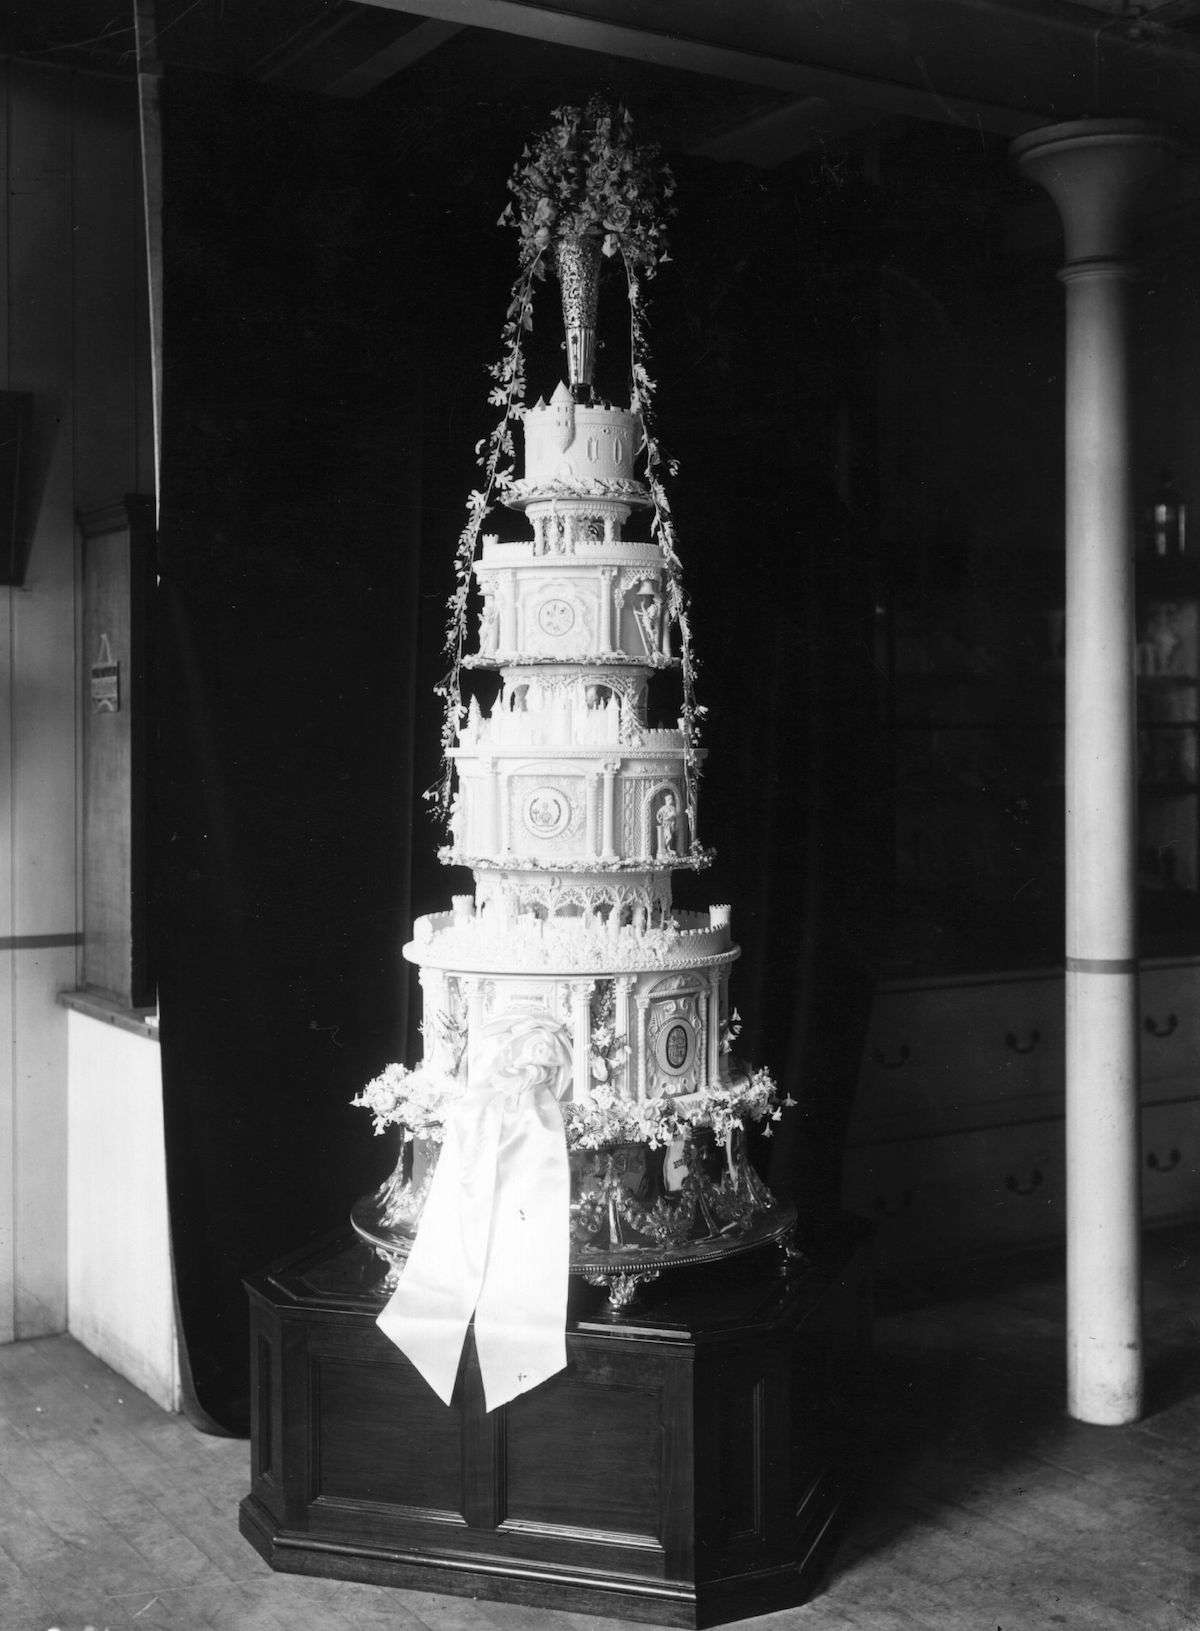 Duke of York wedding cake